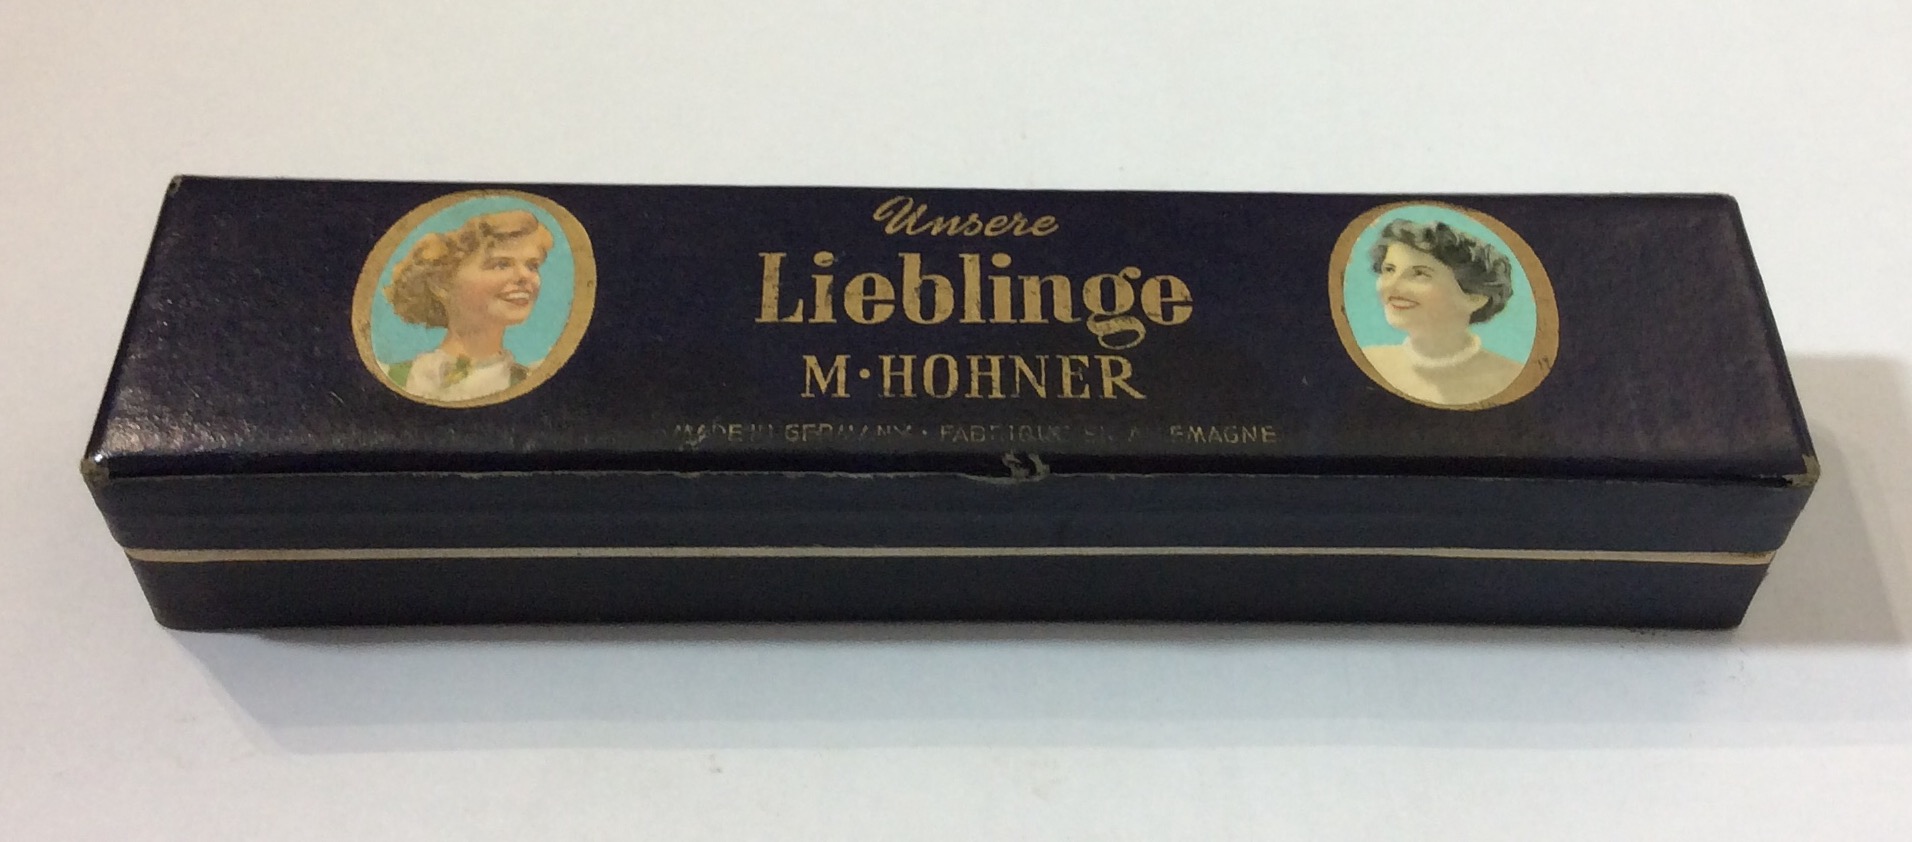 M. HOHNER, A WORLD WAR II GERMAN LEIBERLINGE MOUTH ORGAN Contained in original box, marked 'EIN DANK